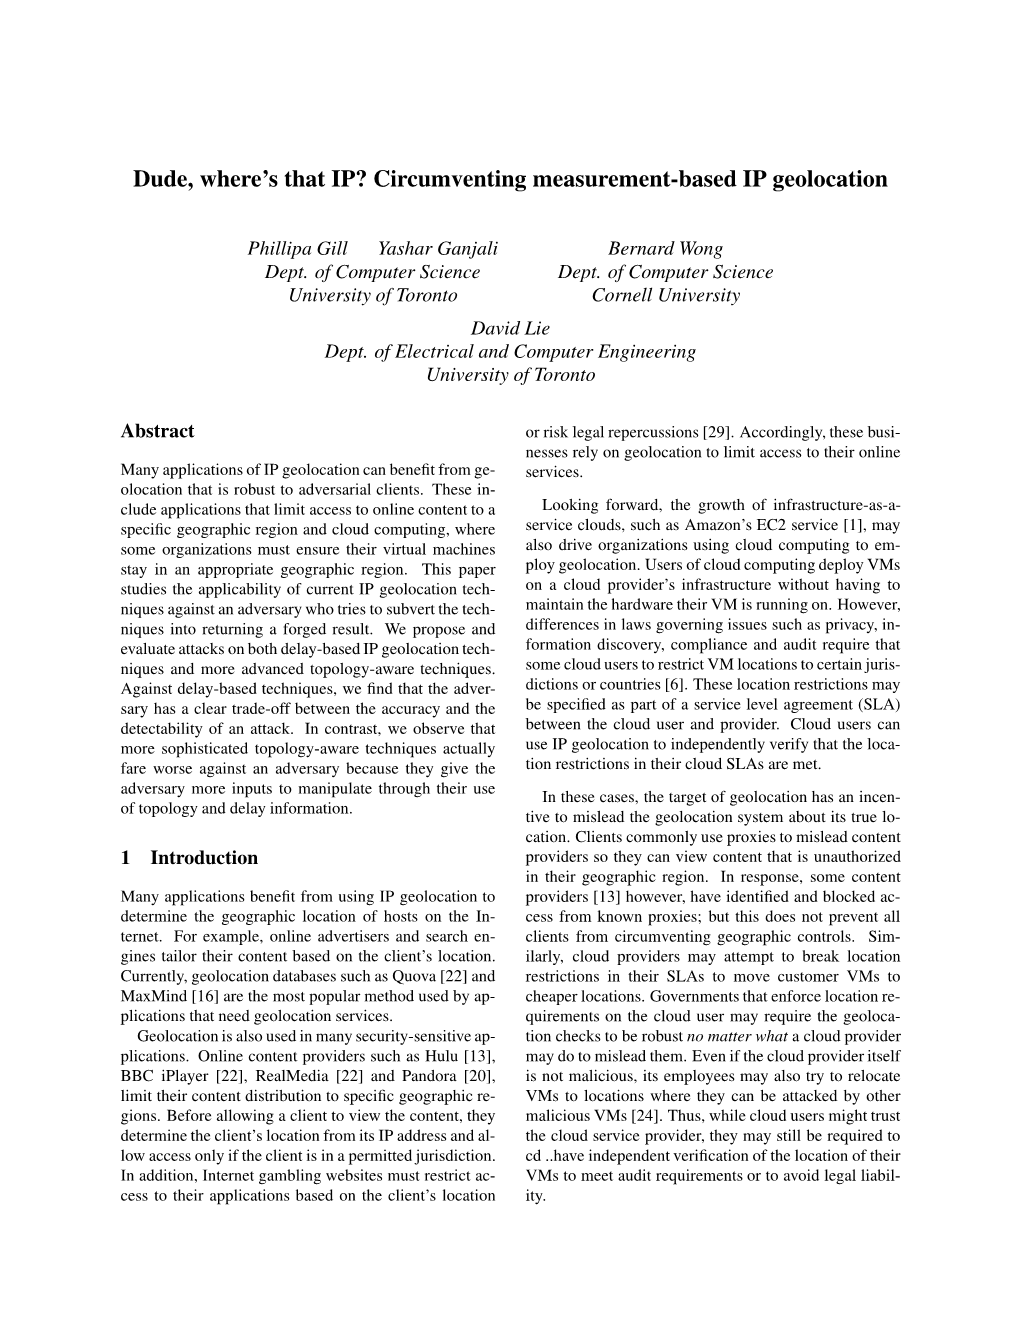 Circumventing Measurement-Based IP Geolocation